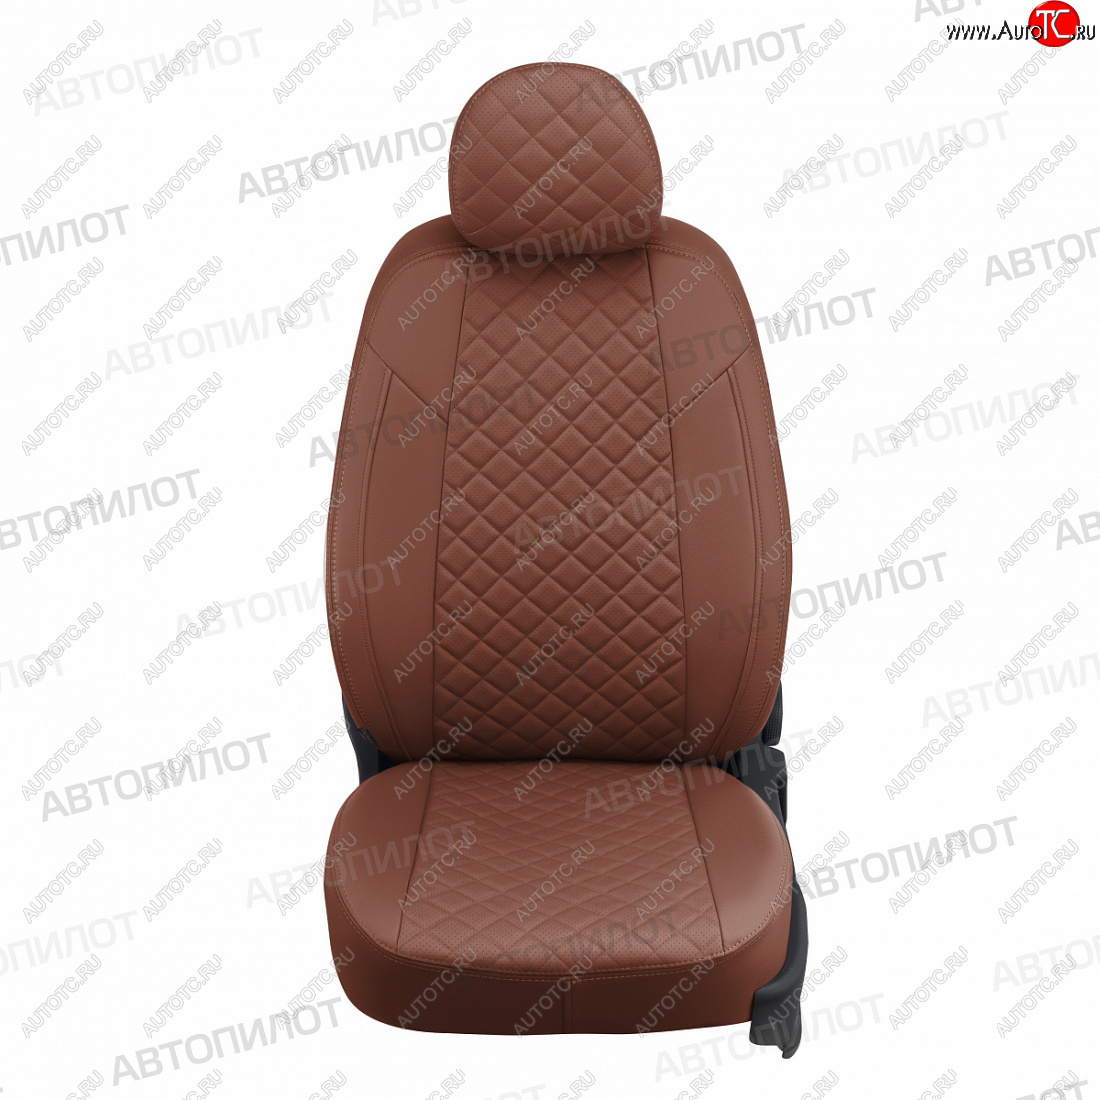 7 799 р. Чехлы сидений (экокожа) Автопилот Ромб  KIA Optima  3 TF (2010-2016) (коричневый)